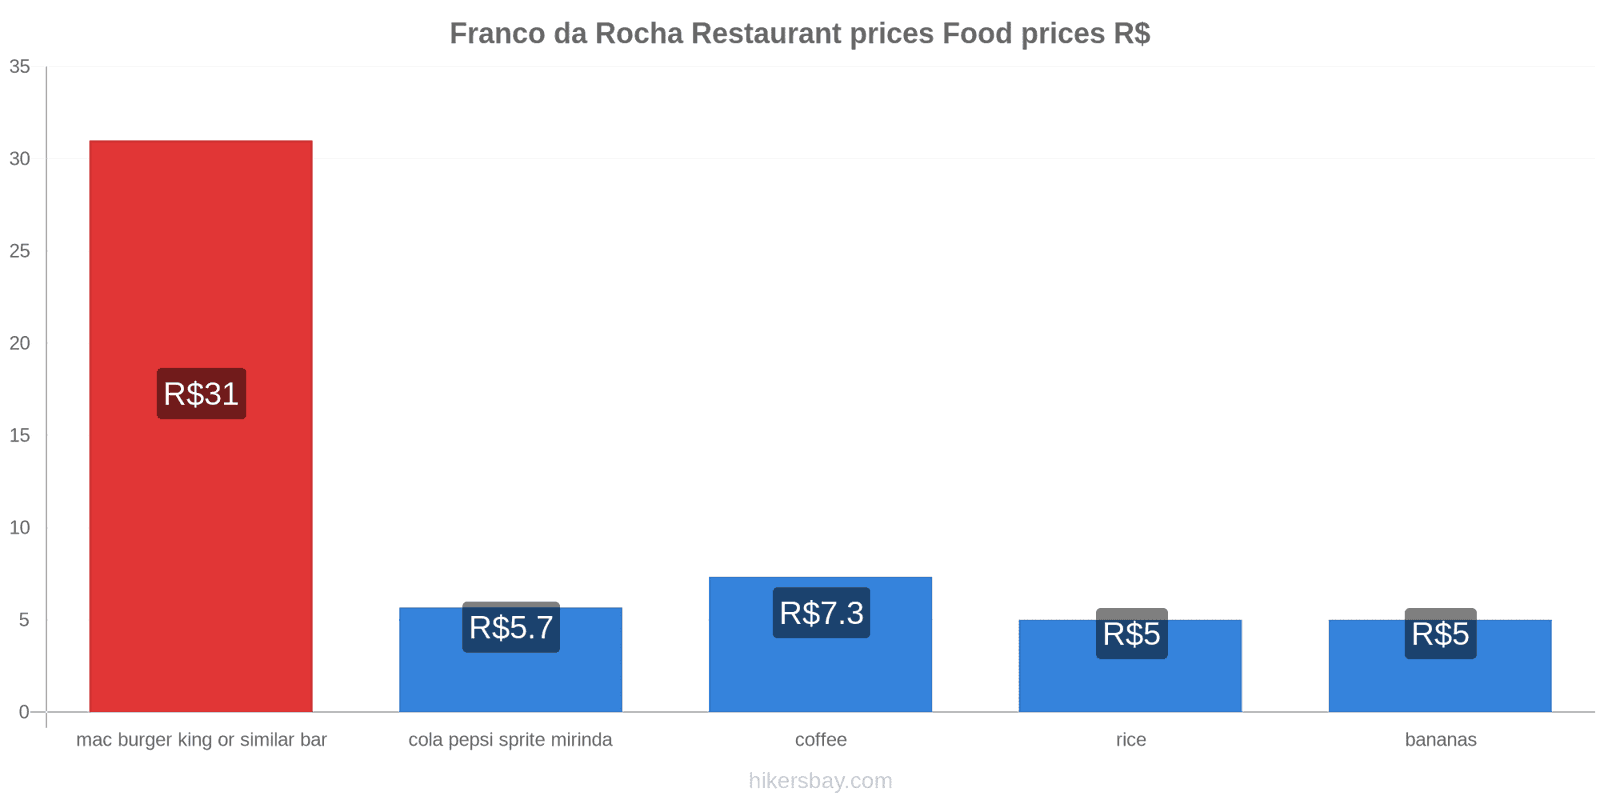 Franco da Rocha price changes hikersbay.com